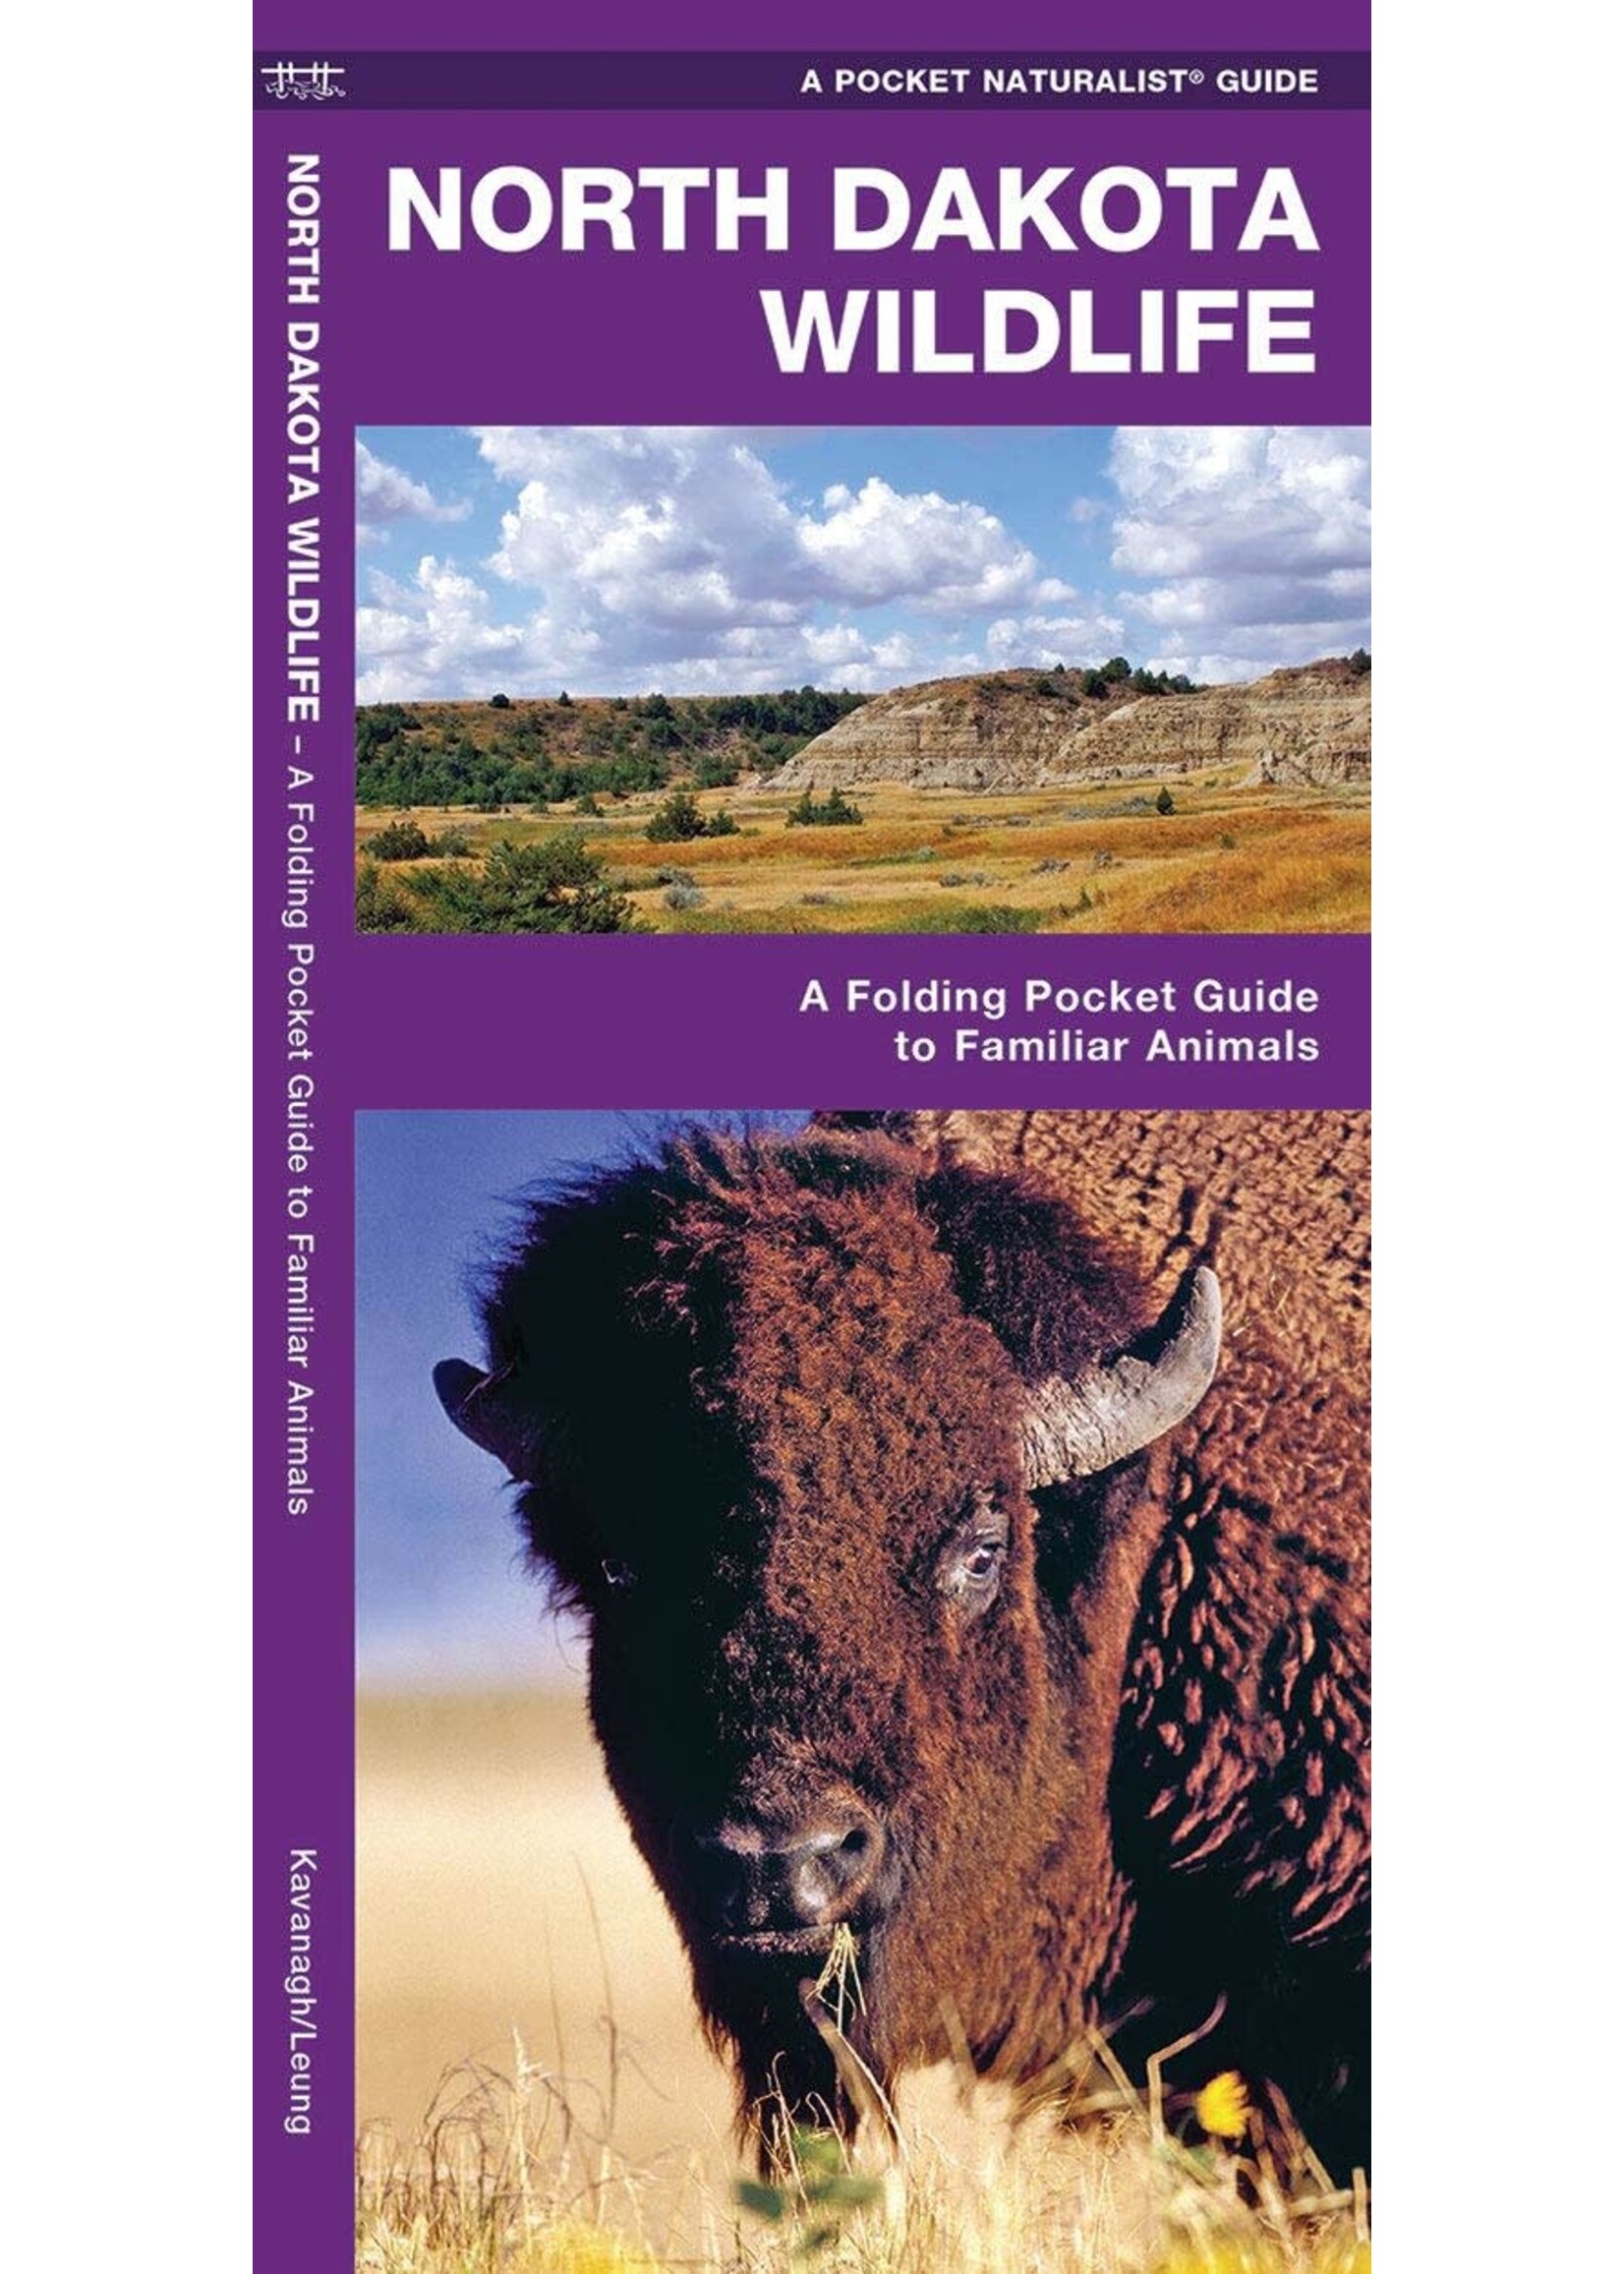 North Dakota Wildlife: A Folding Pocket Guide to Familiar Animals